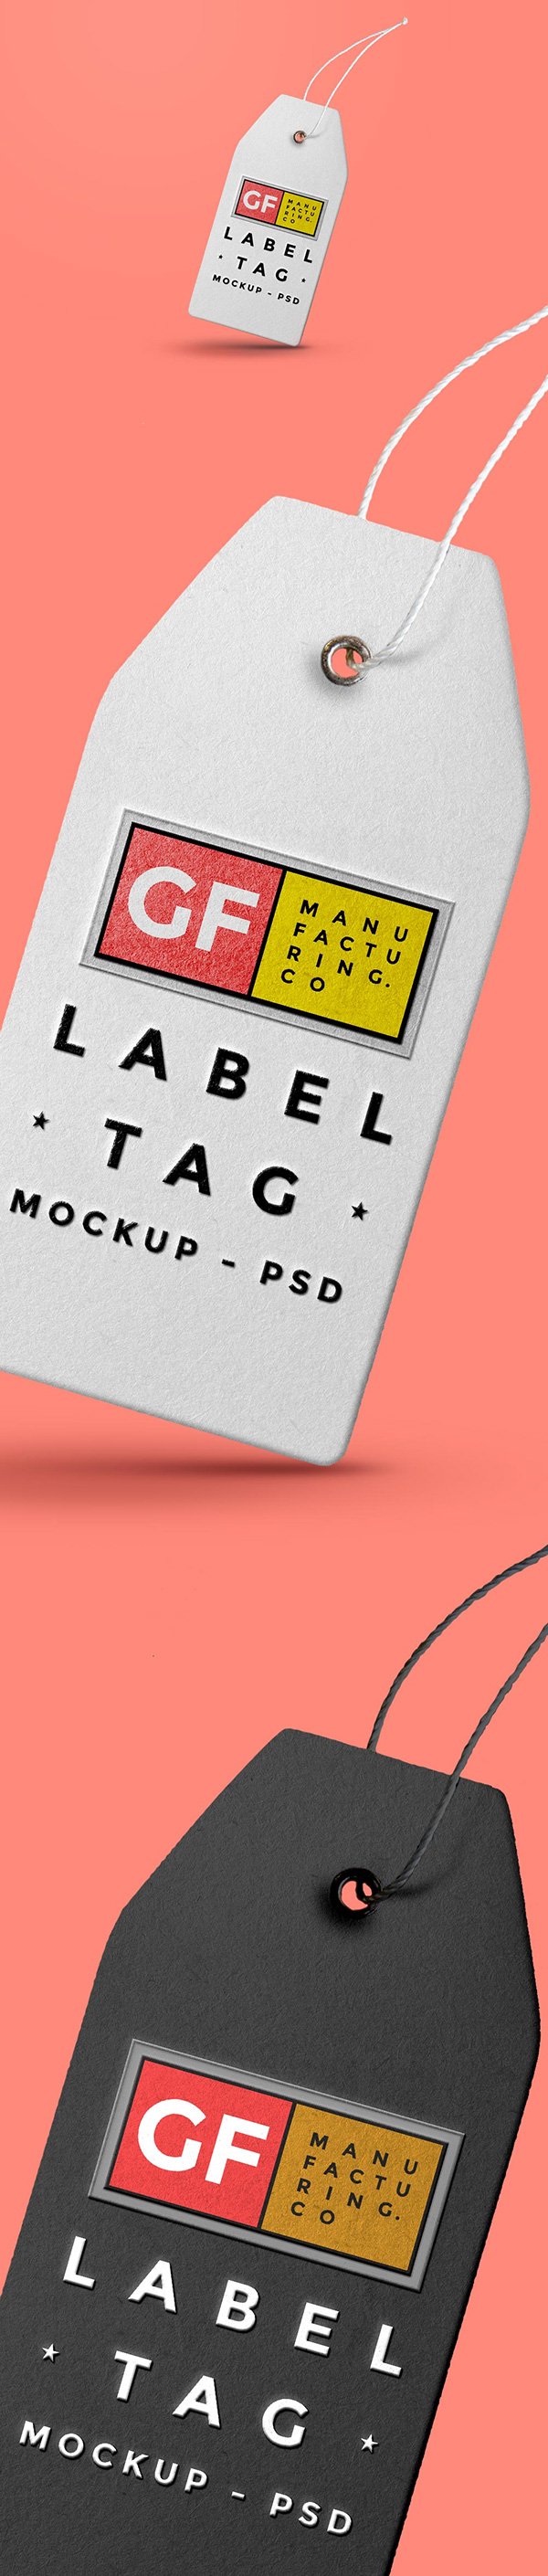 Label Tag Mockup